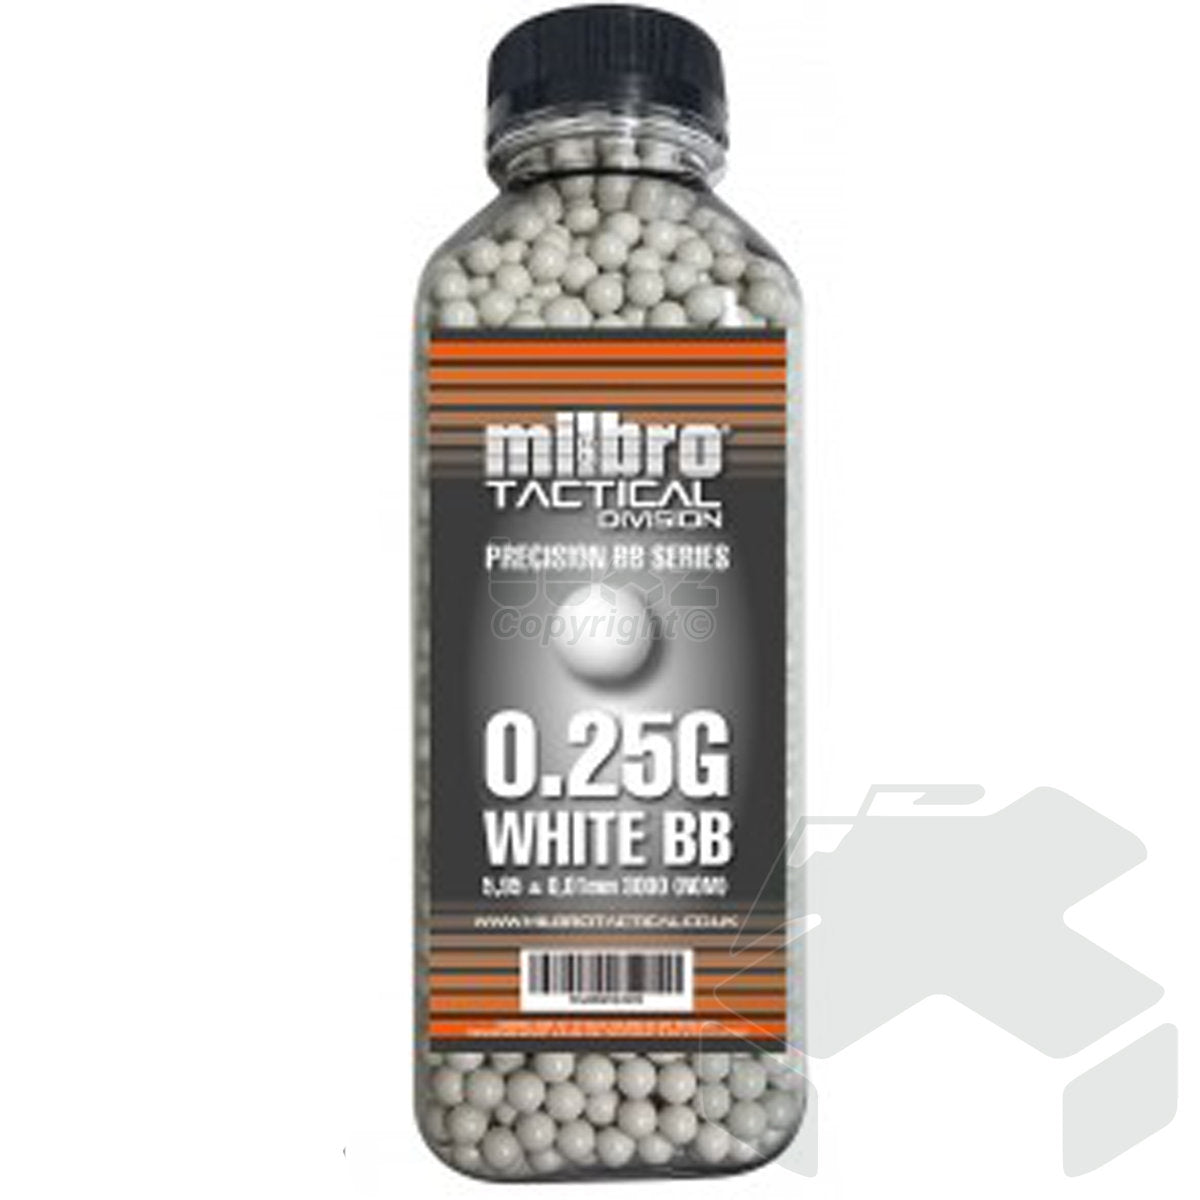 Milbro Tactical Division 0.25G 6mm BB 3000 Pcs Bottle - White